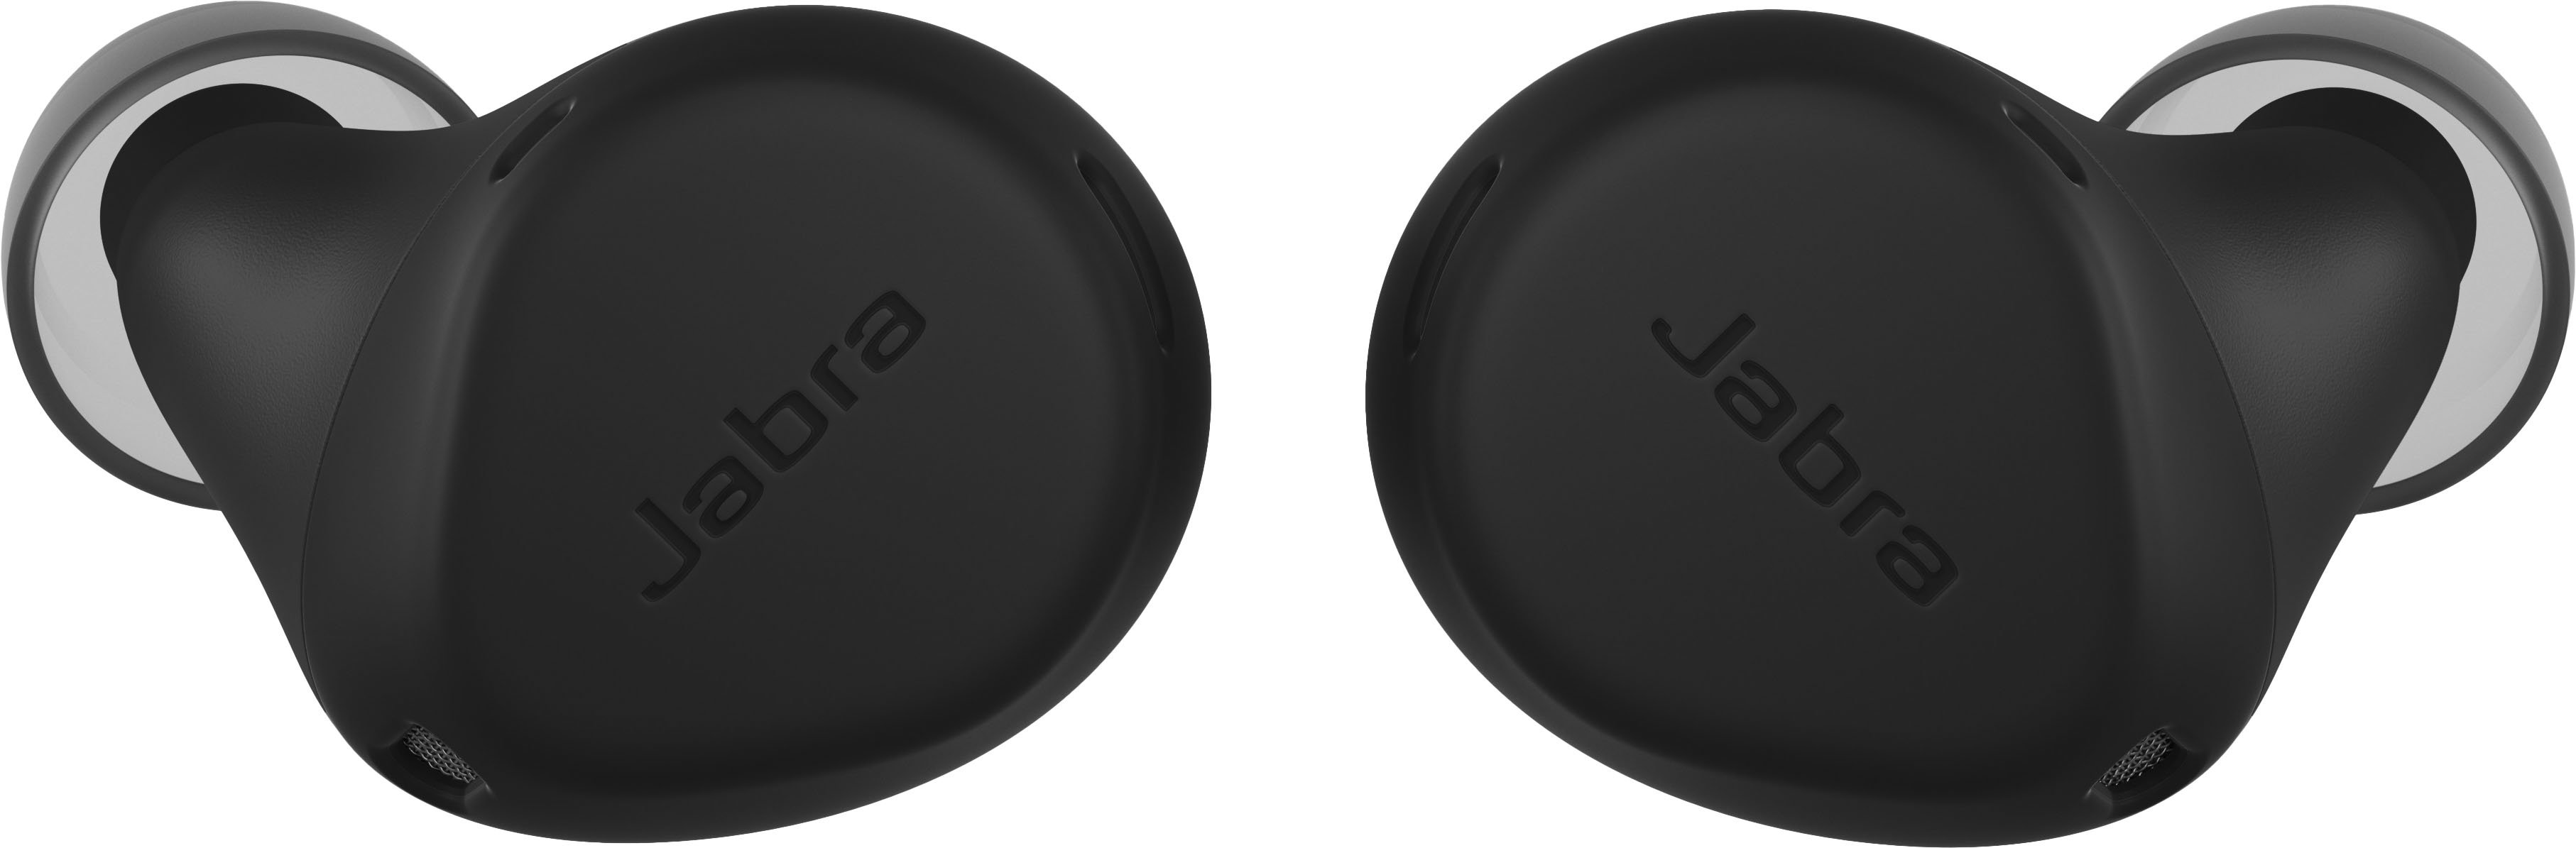 Jabra Elite 7 Active True Wireless Noise Canceling In-Ear Headphones Black  100-99171000-02 - Best Buy